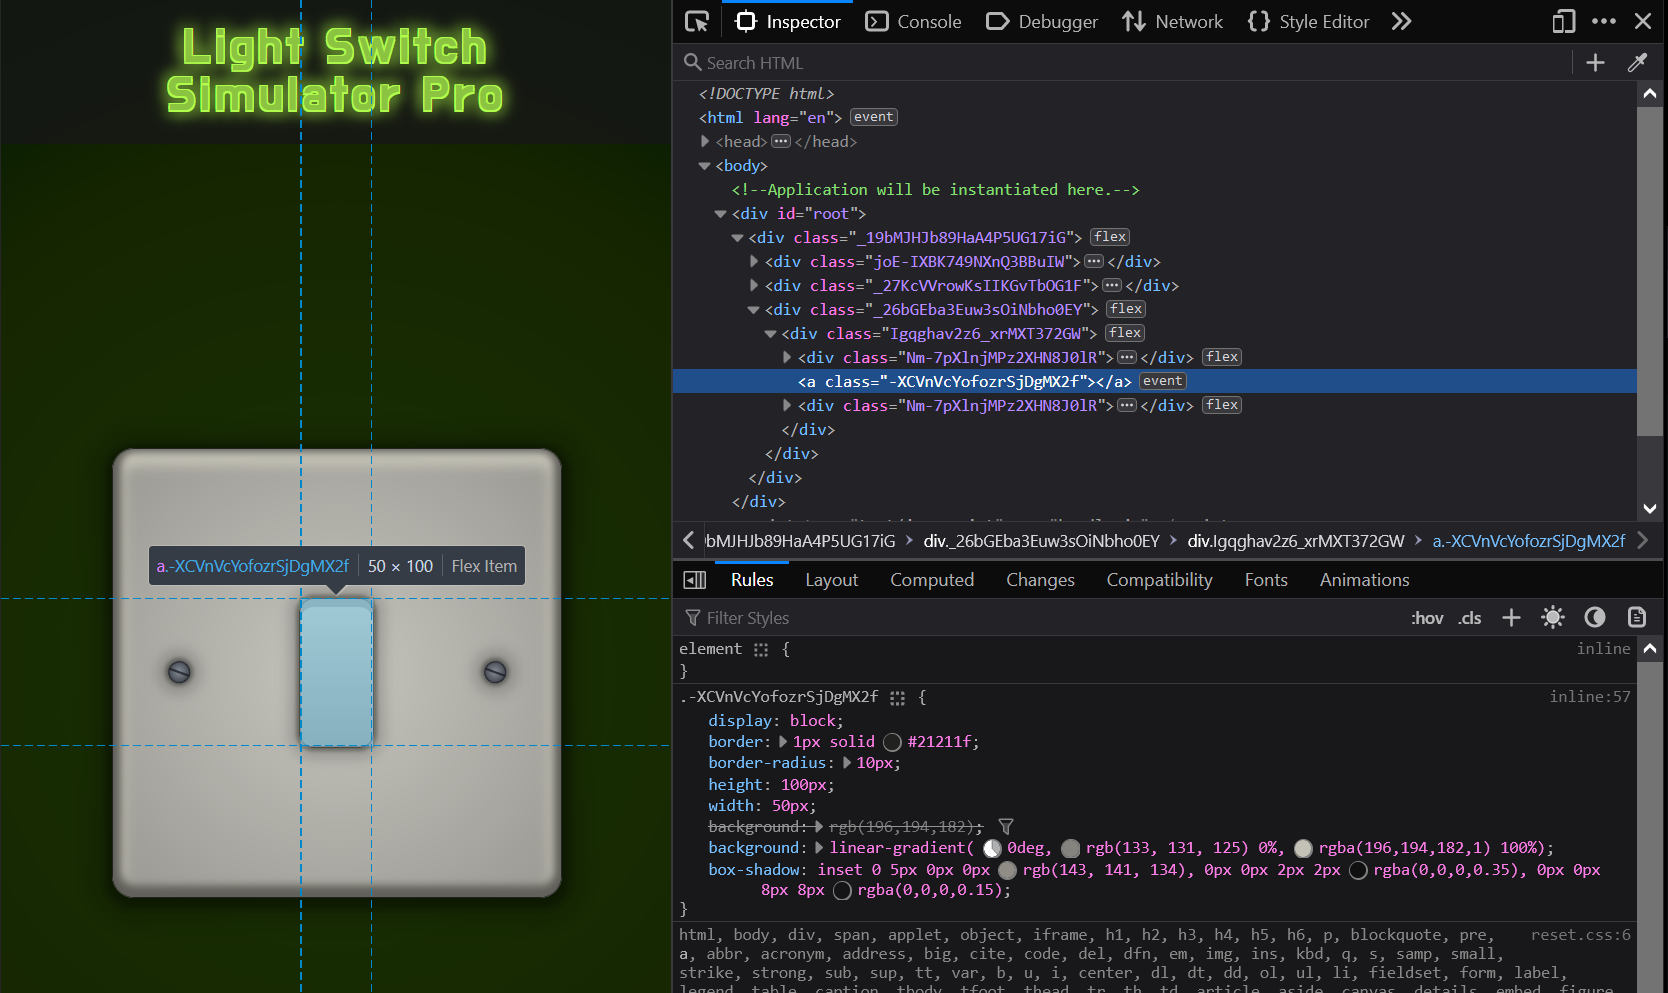 Light Switch Simulator Pro's CSS workings